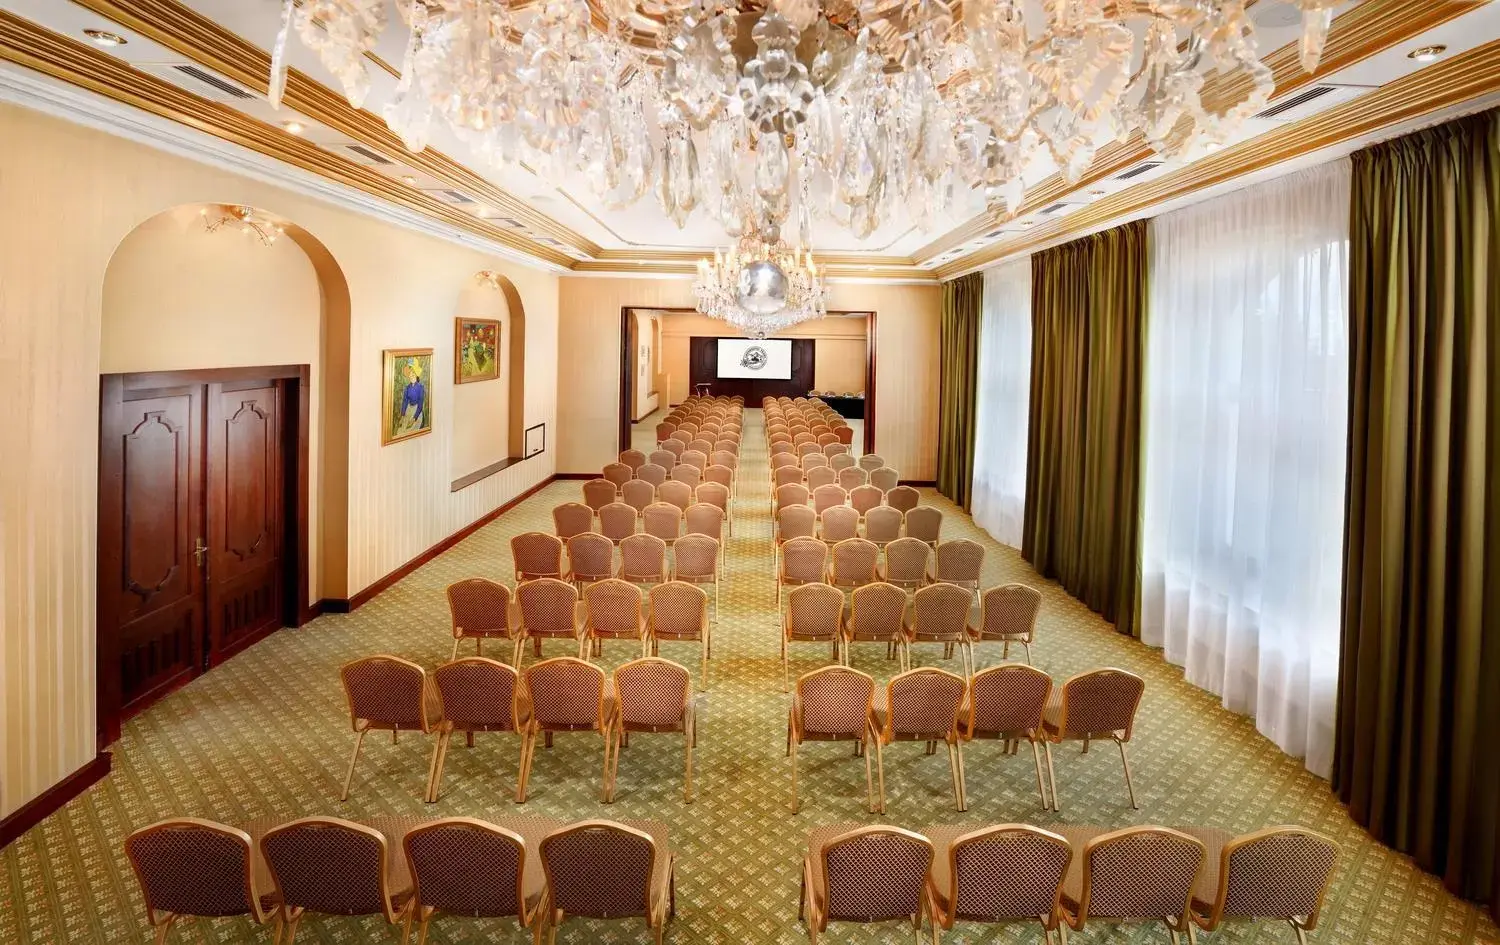 Banquet/Function facilities, Banquet Facilities in Grand Hotel Praha